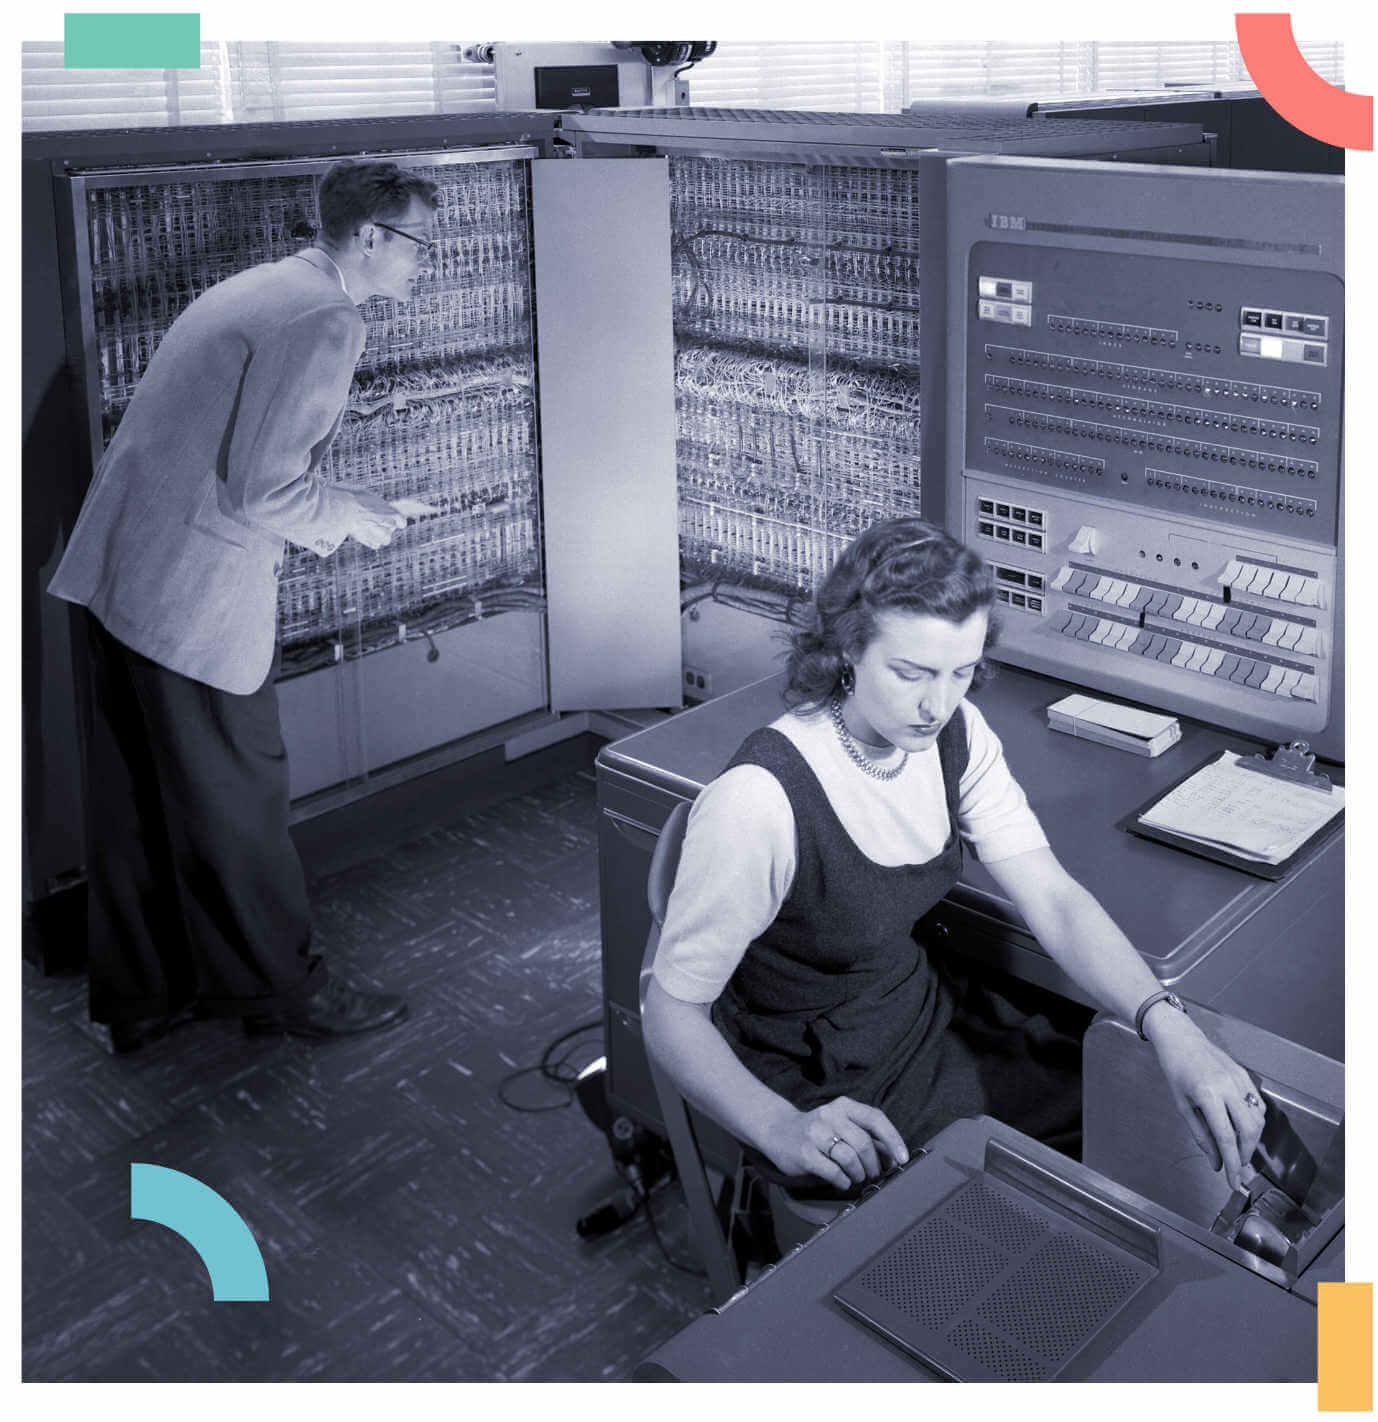 2 professionals monitoring a vintage computer